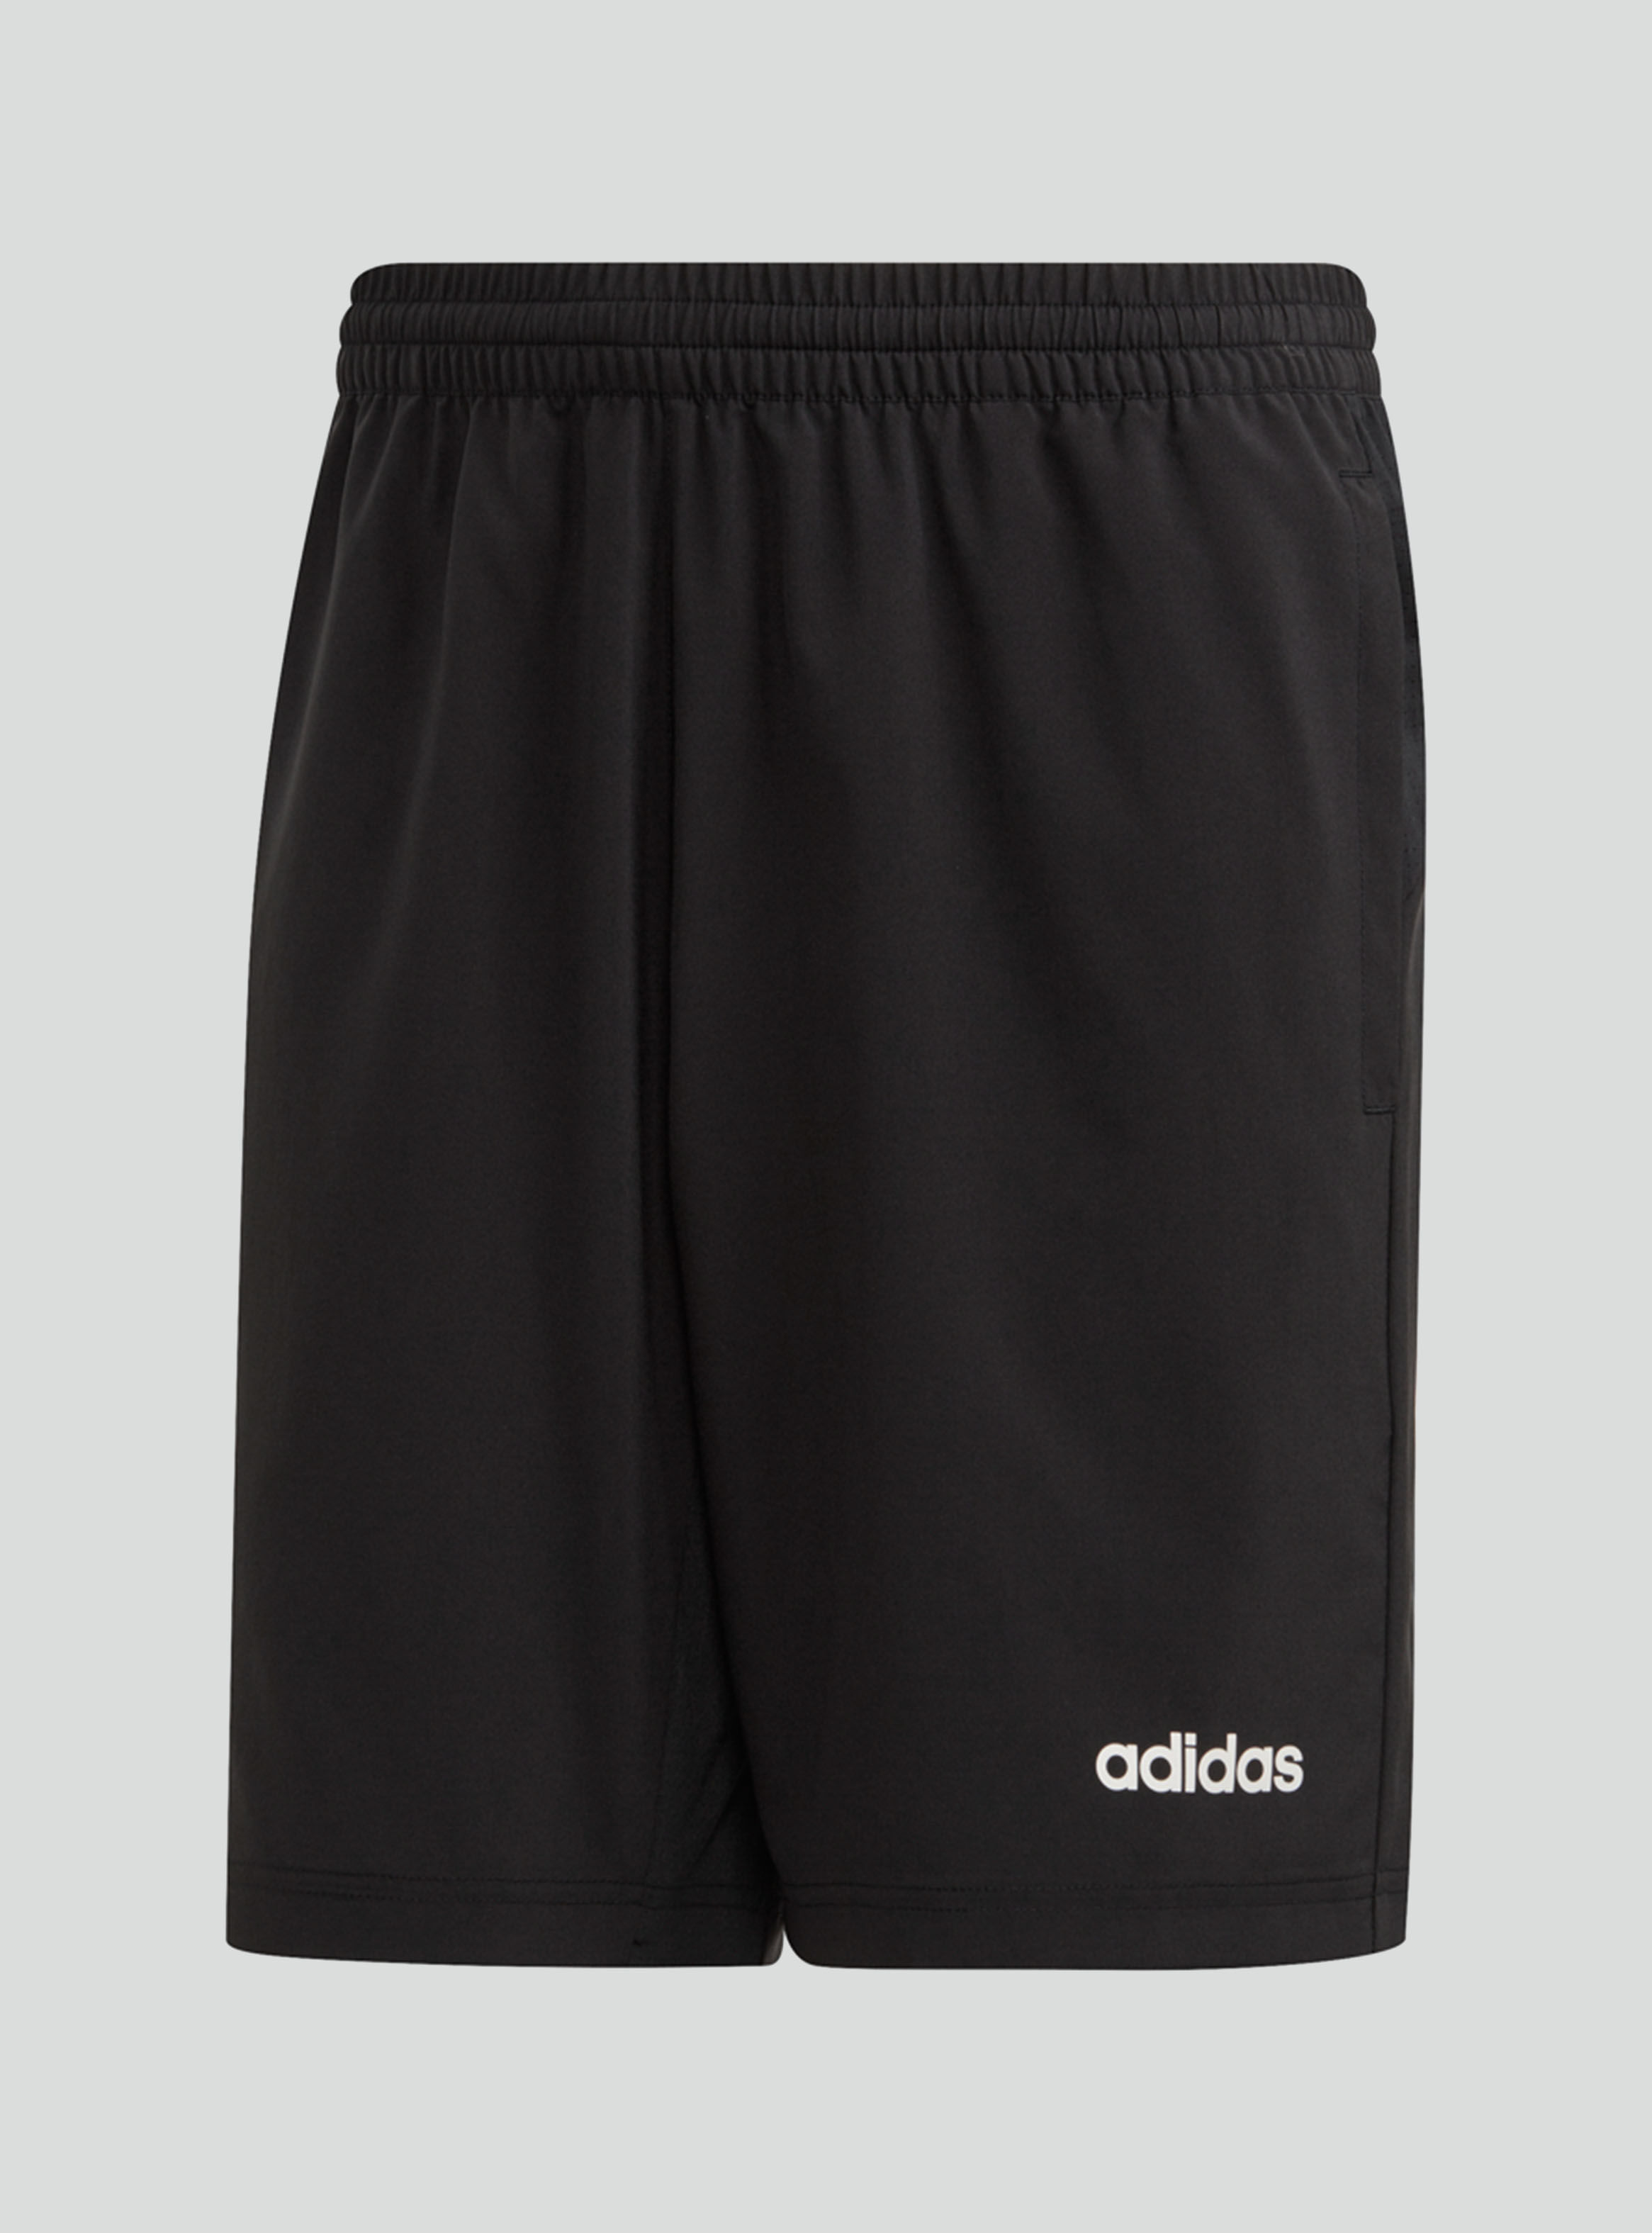 Short Adidas Deportivo Cordón Ajustable - Shorts | Paris.cl